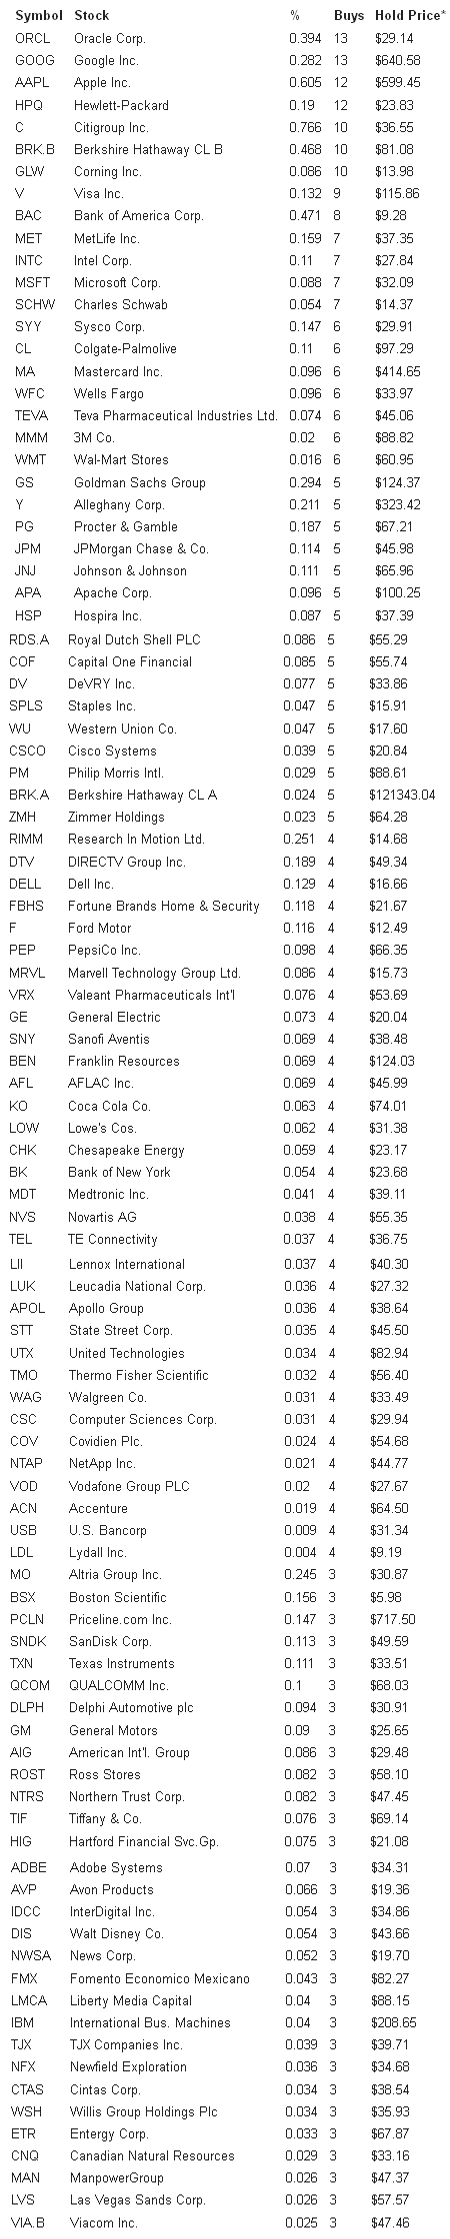 Symbol Stock % Buys Hold Price